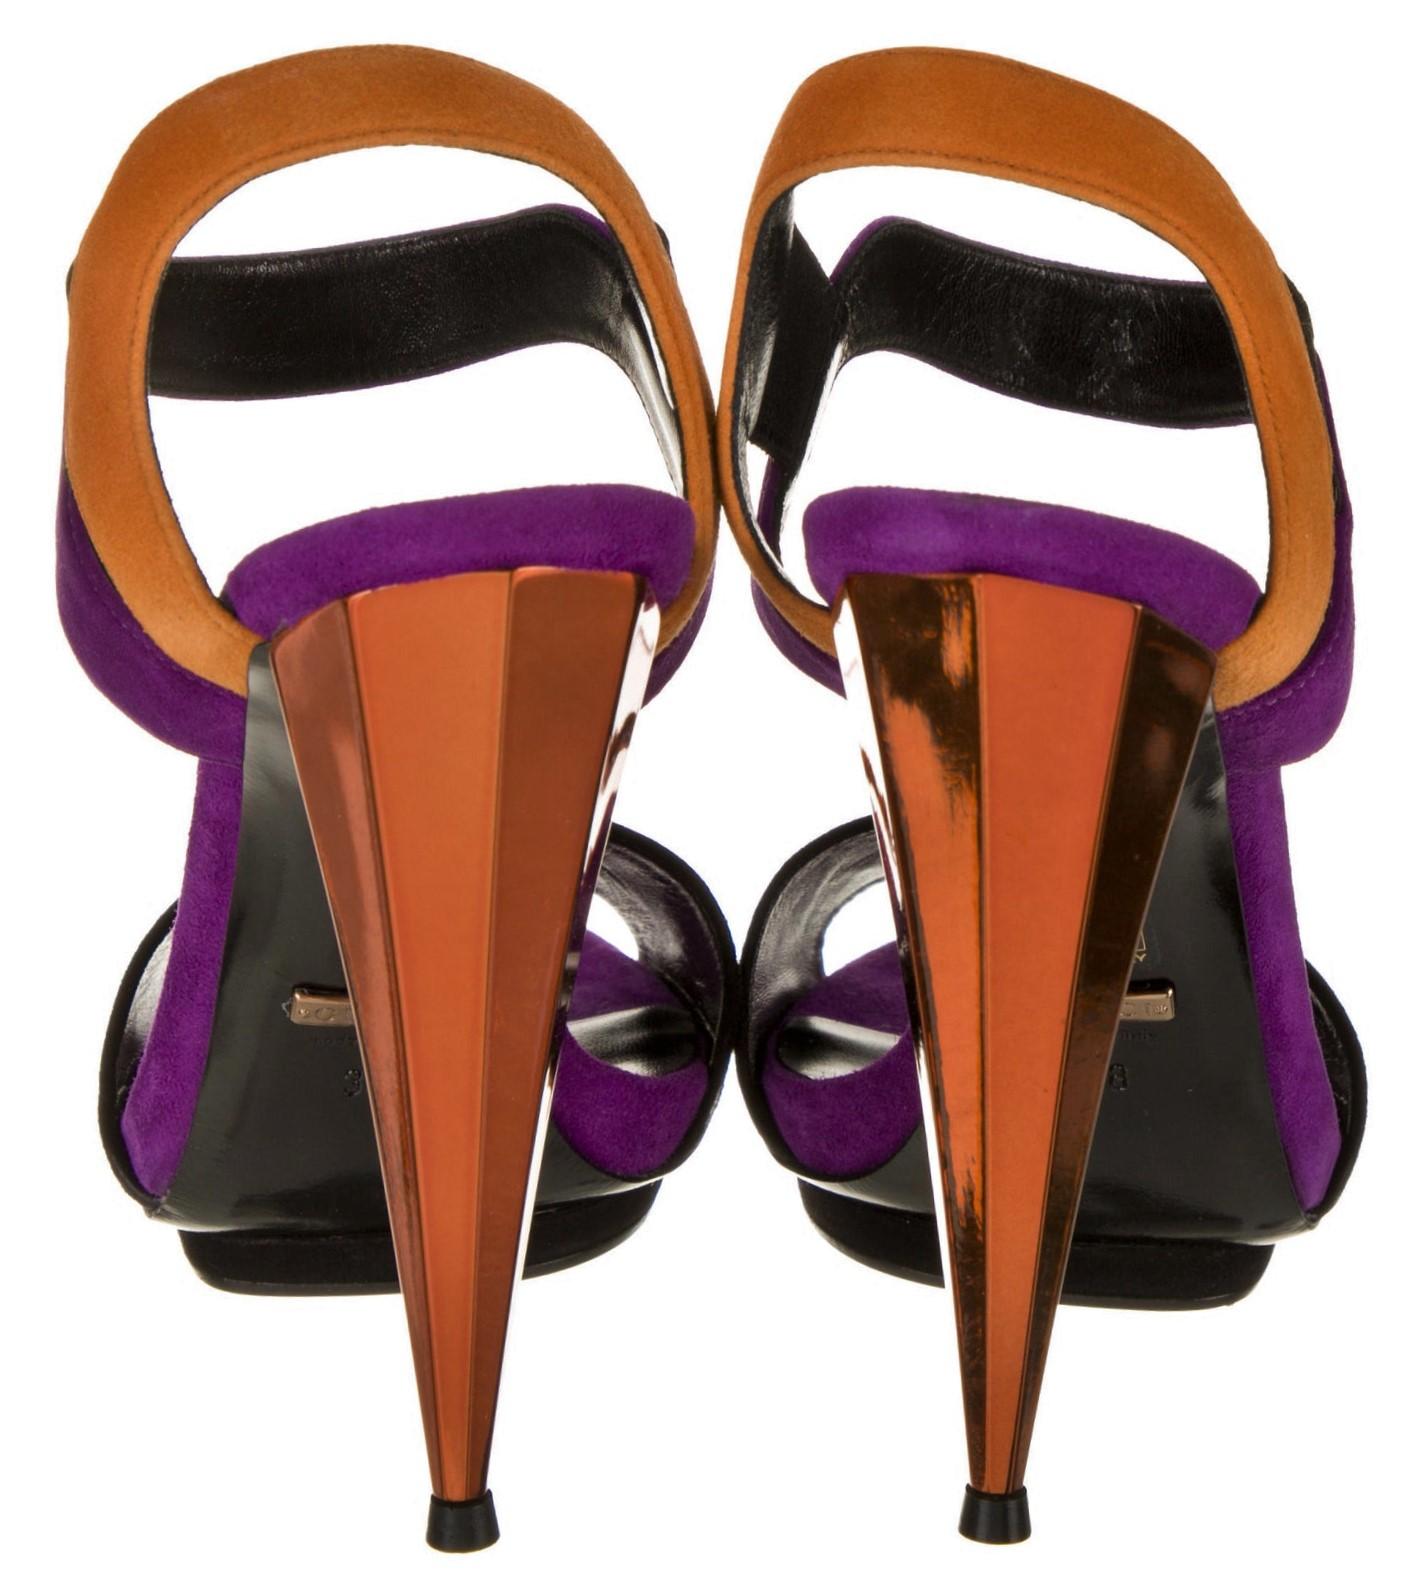 New Gucci Ad Runway 2014 Purple Orange Suede Mirrored Pump Heels Sz 37.5 In New Condition For Sale In Leesburg, VA